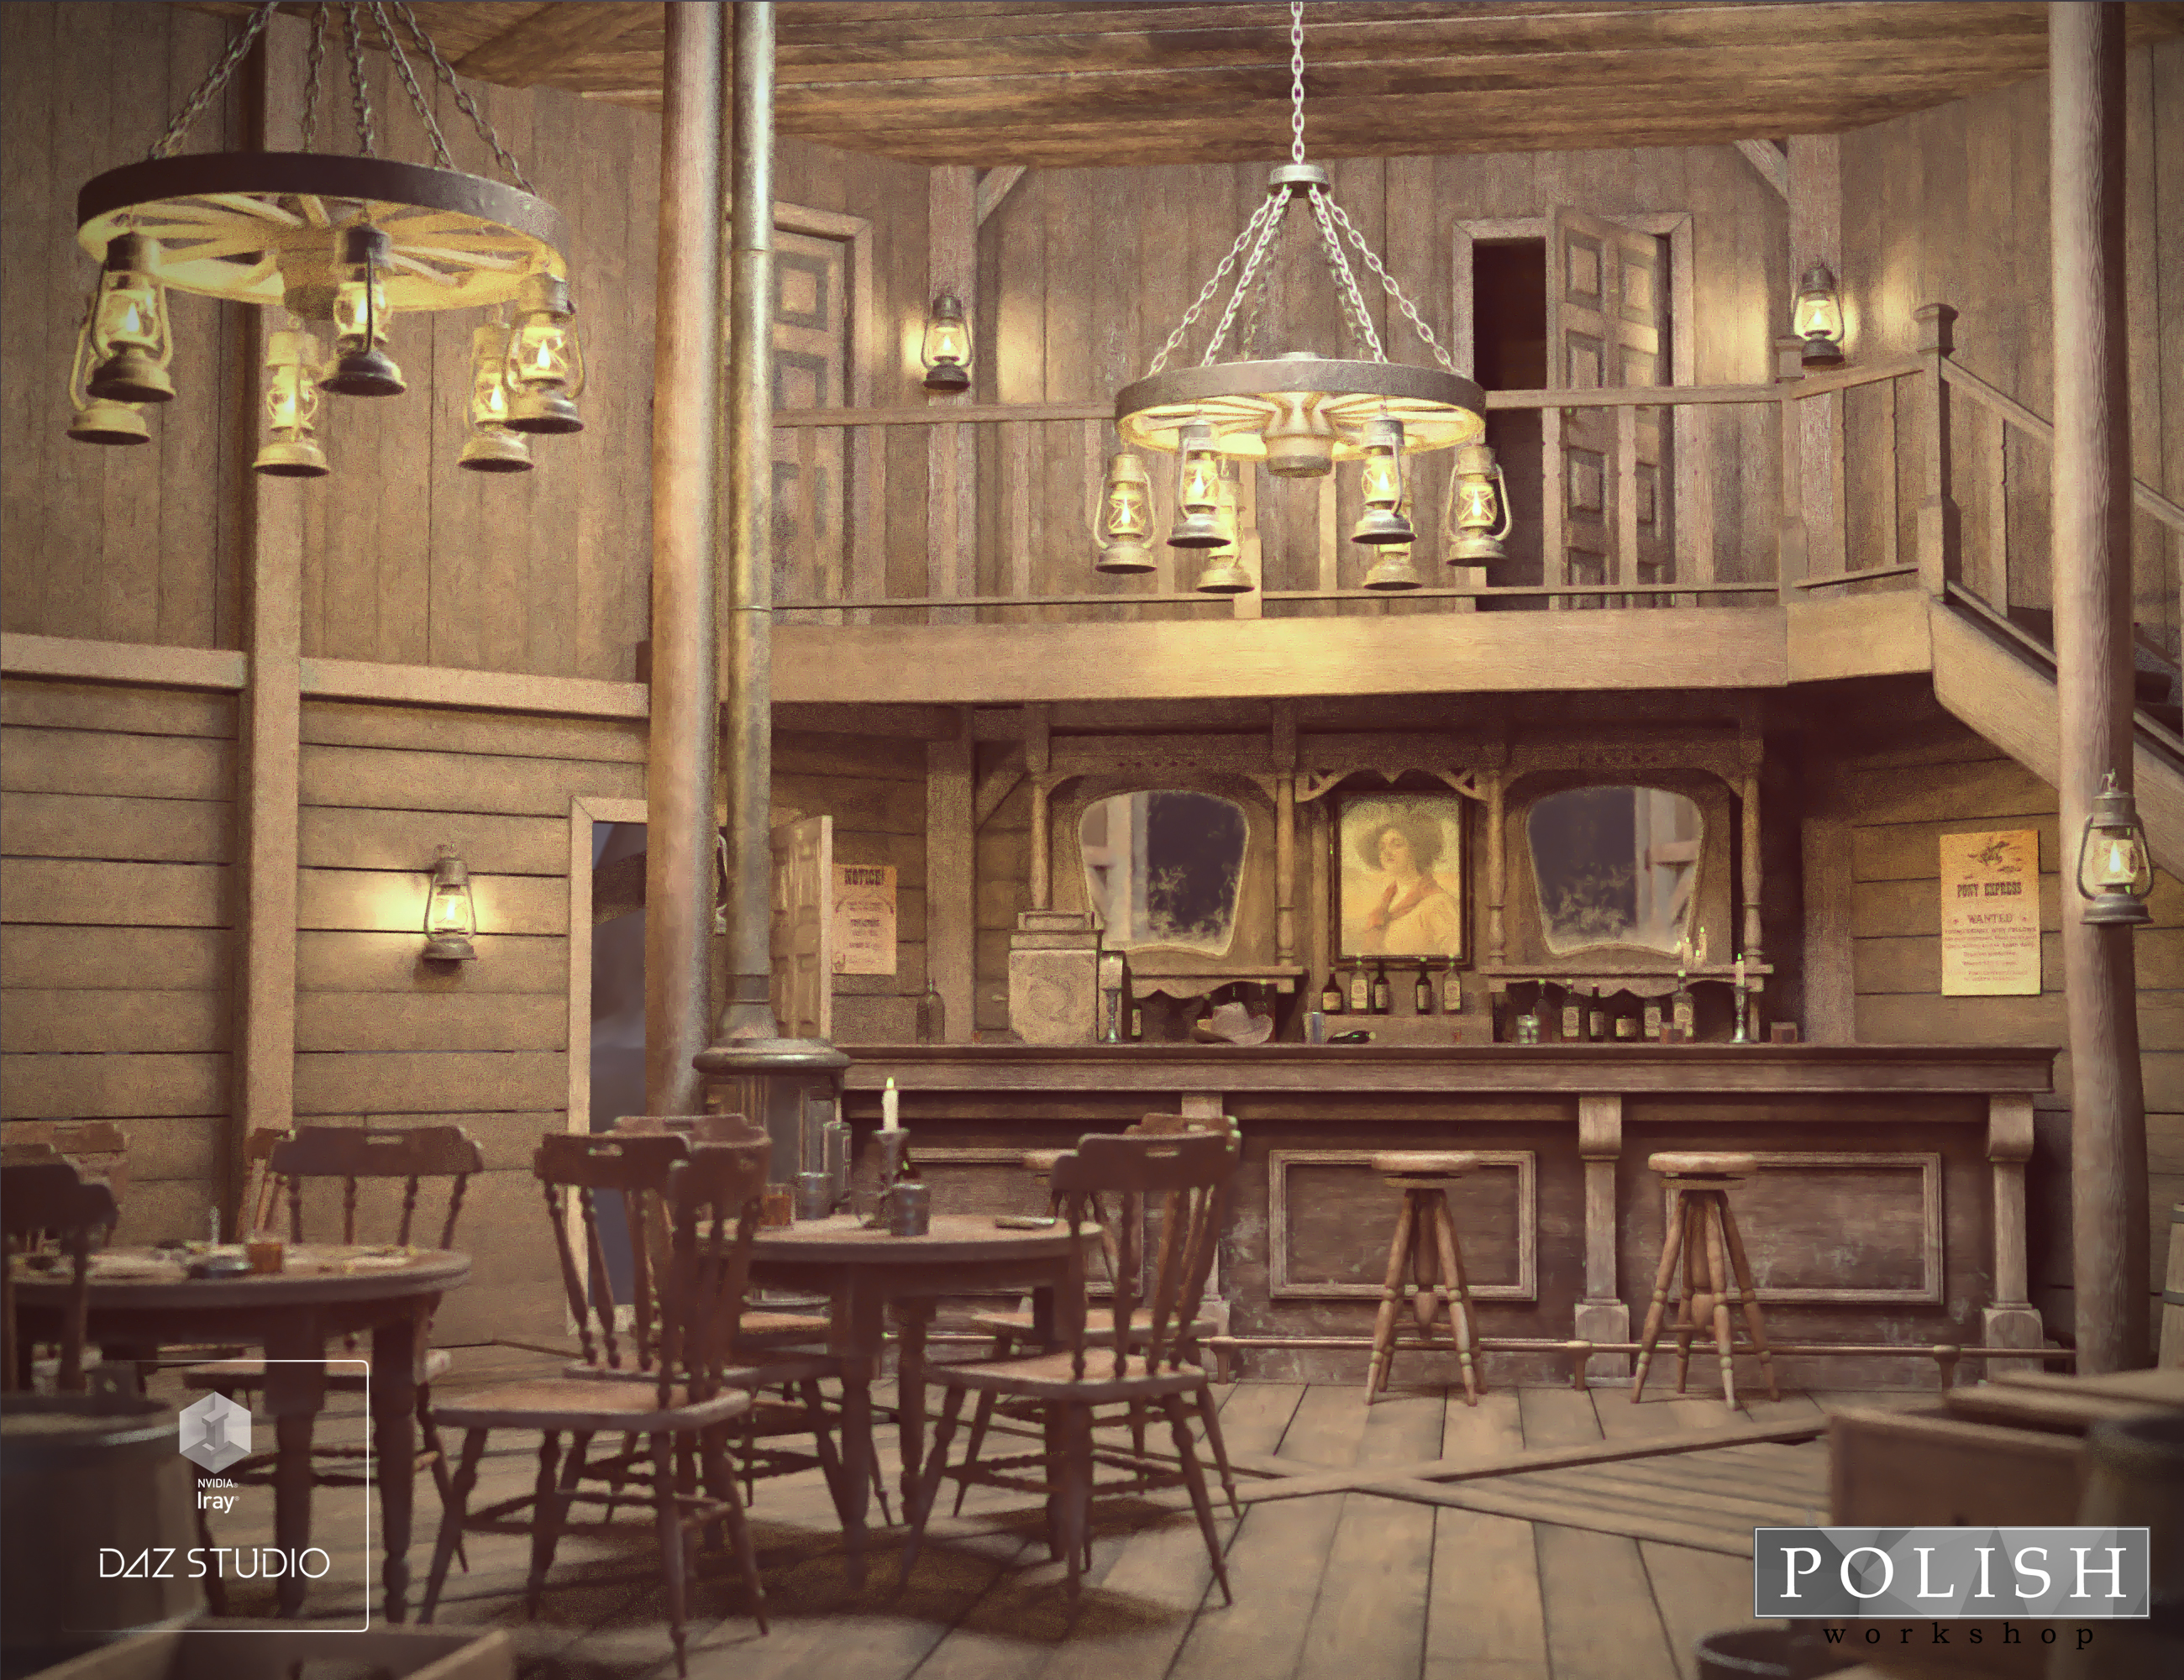 Western Saloon by: Polish, 3D Models by Daz 3D